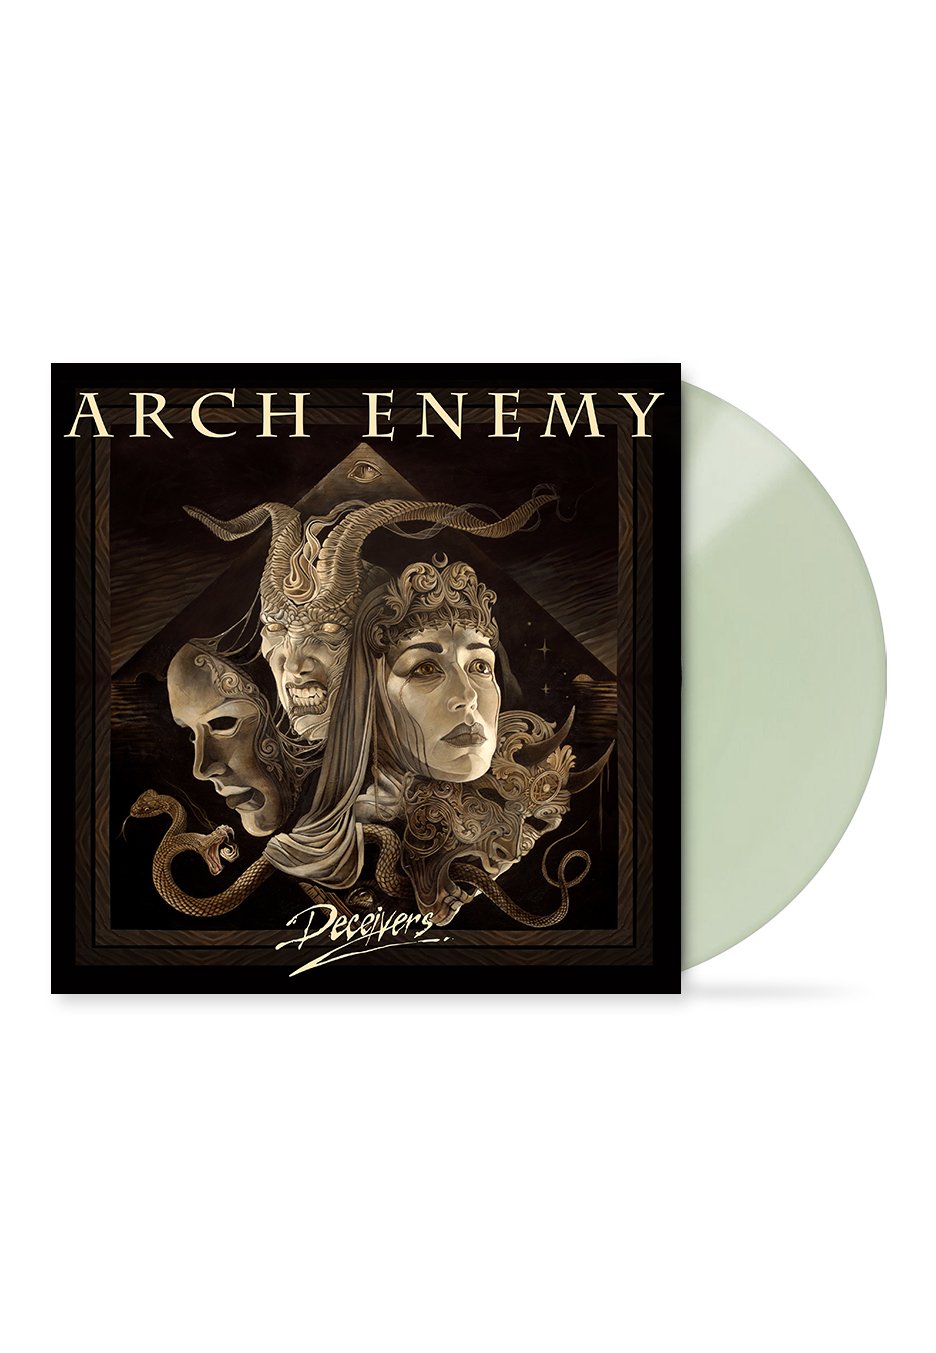 Arch Enemy - Deceivers Ltd. Glow In The Dark - Colored Vinyl